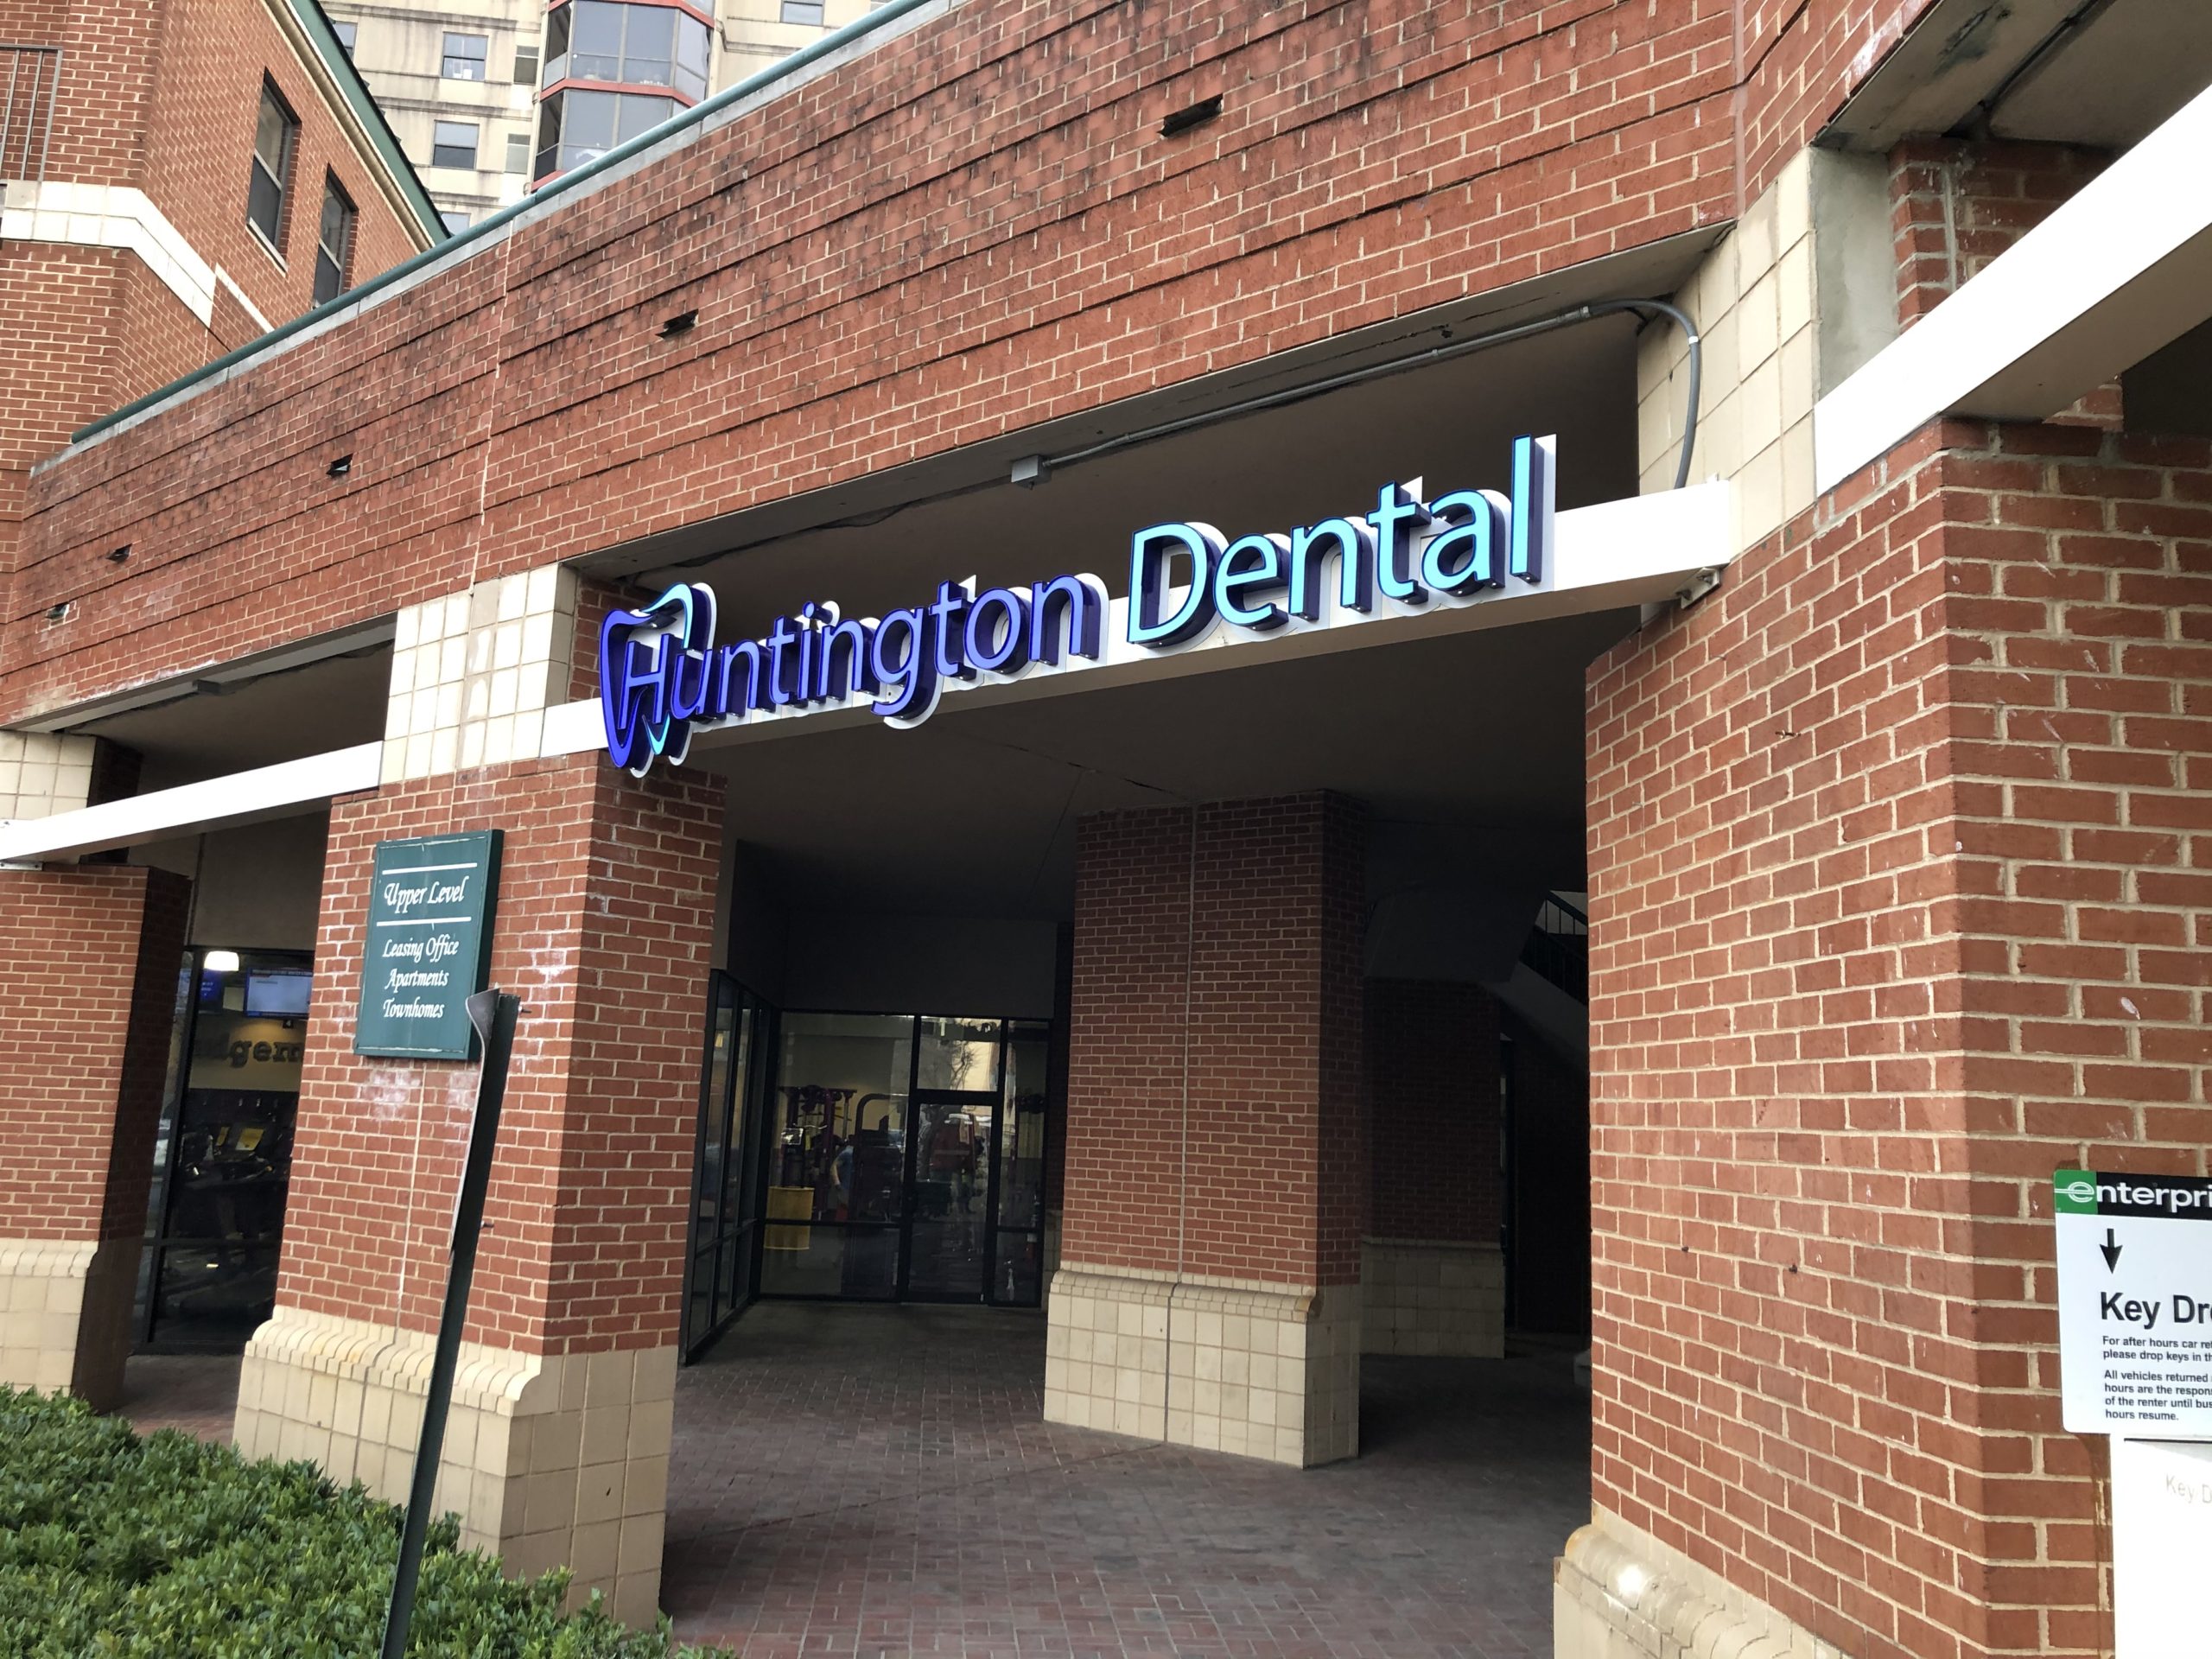 Huntington dental exterior sign